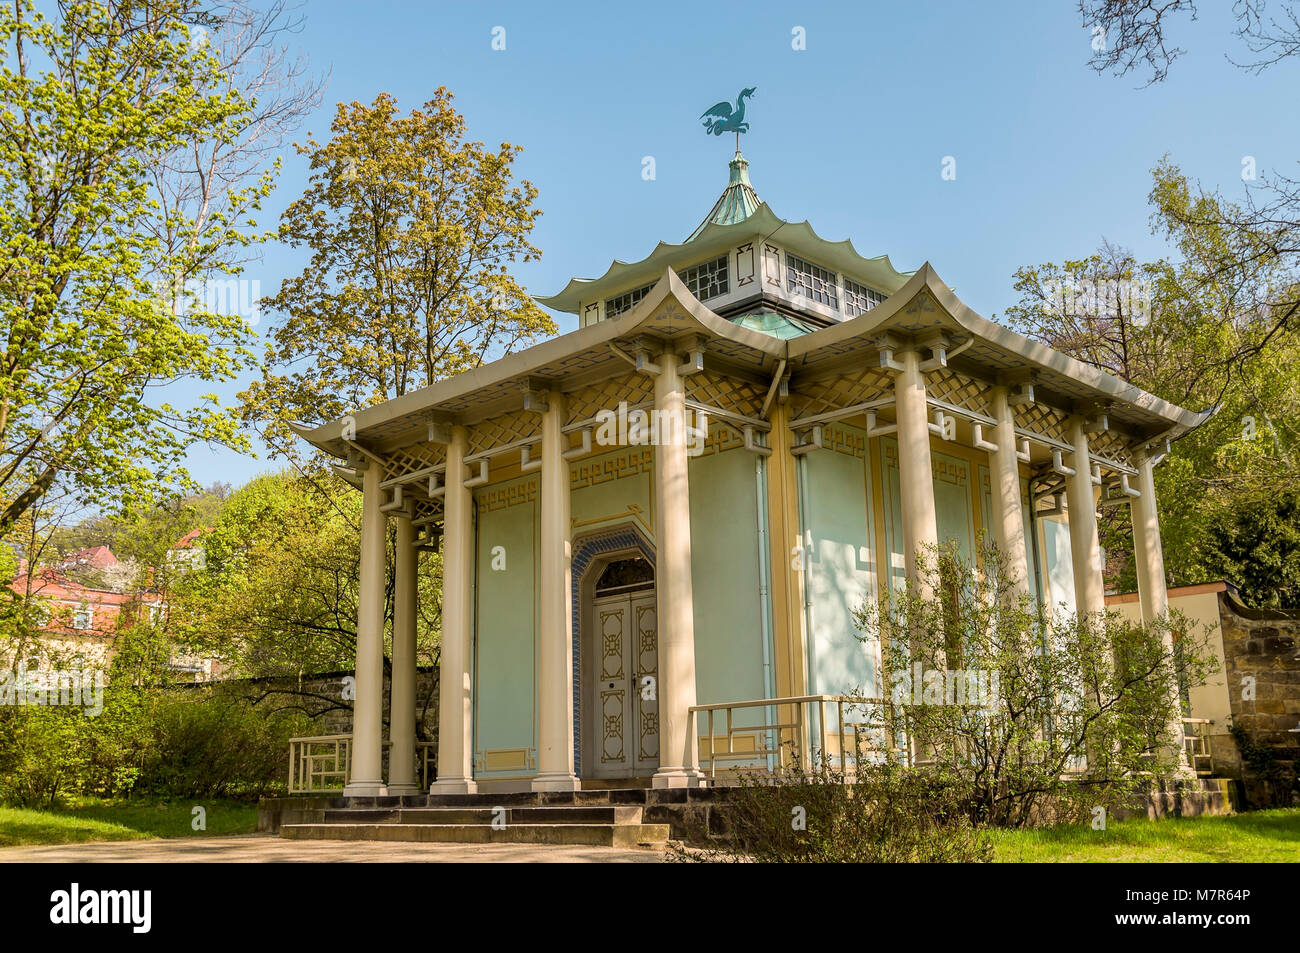 Chinesischer Pavillion im Schlosspark Pillnitz, Dresde, Saxe, Allemagne Banque D'Images